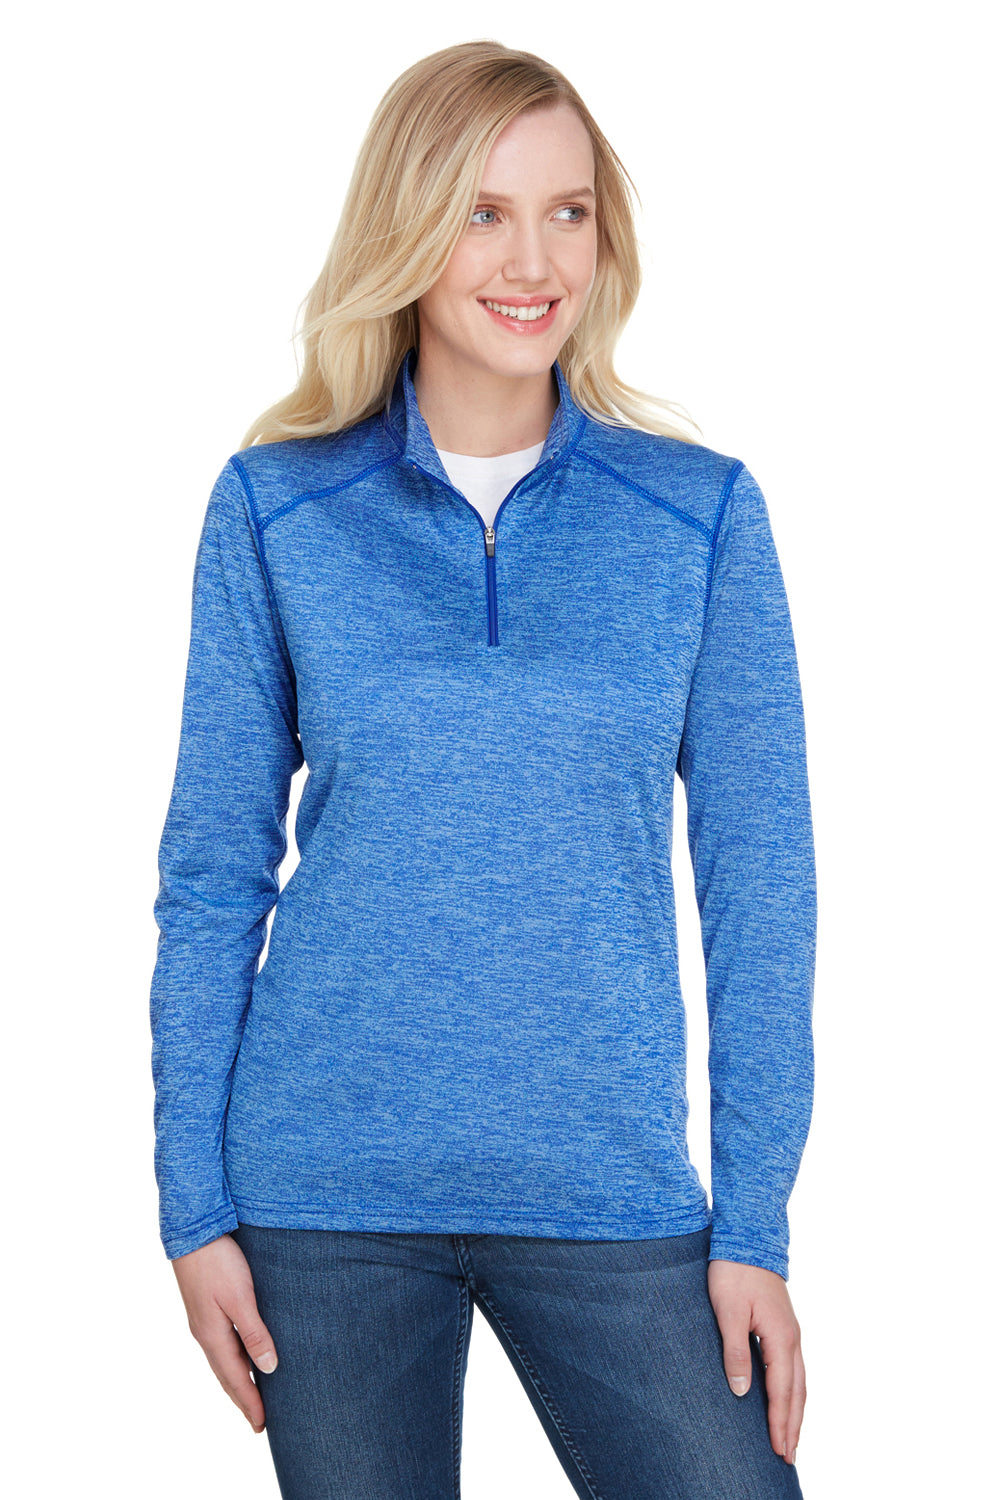 A4 NW4010 Womens Tonal Space Dye Performance Moisture Wicking 1/4 Zip Sweatshirt Light Blue Model Front